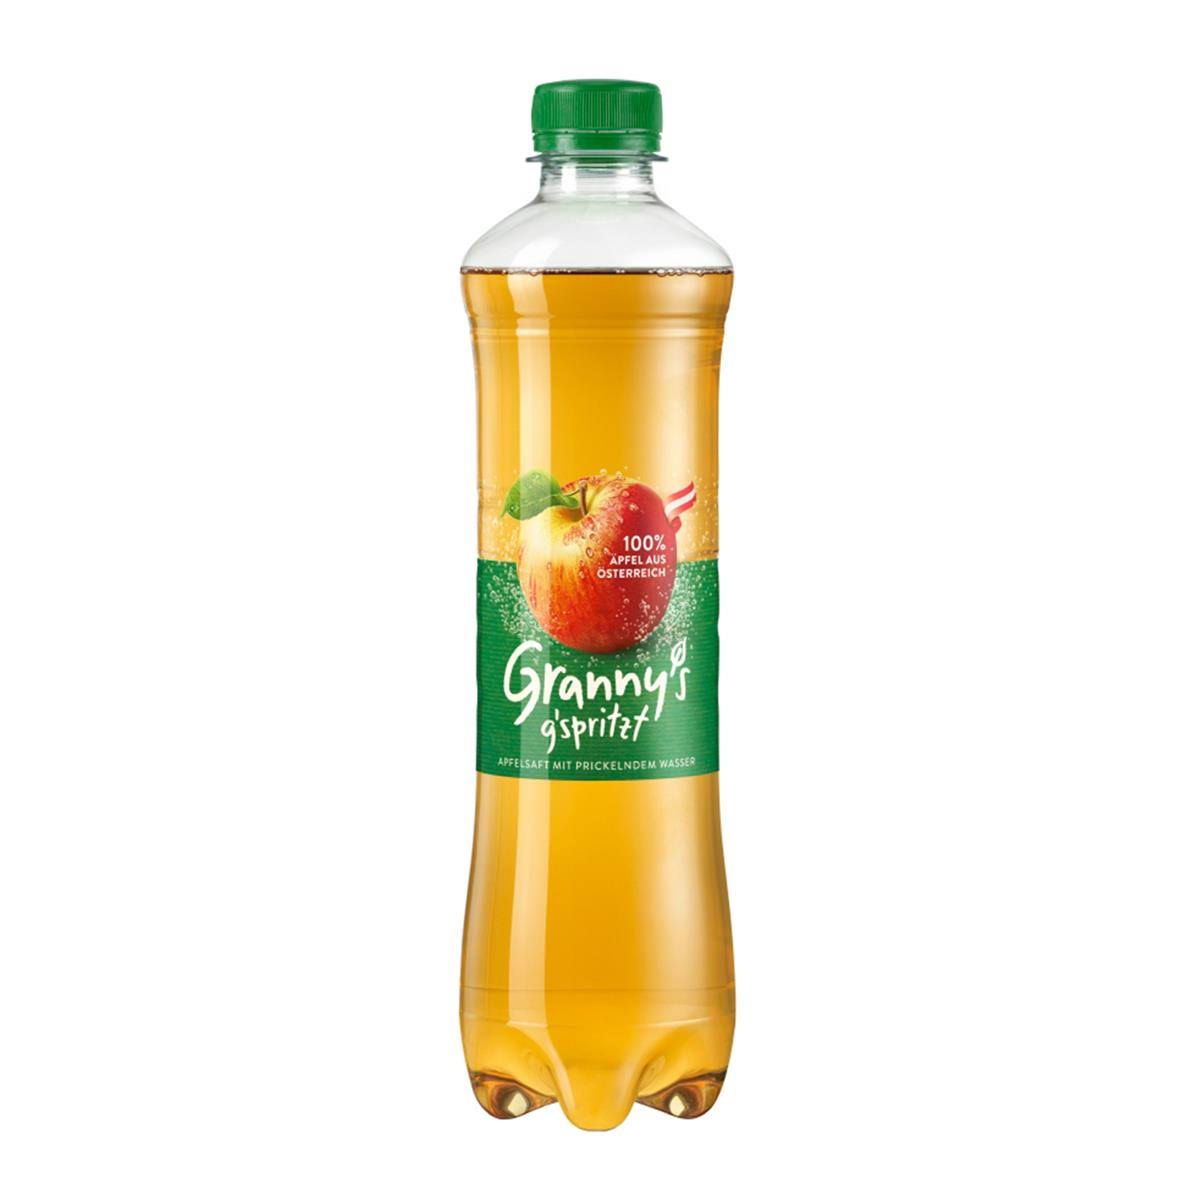 Granny's Apple Juice G'spiritzt 0.5 L